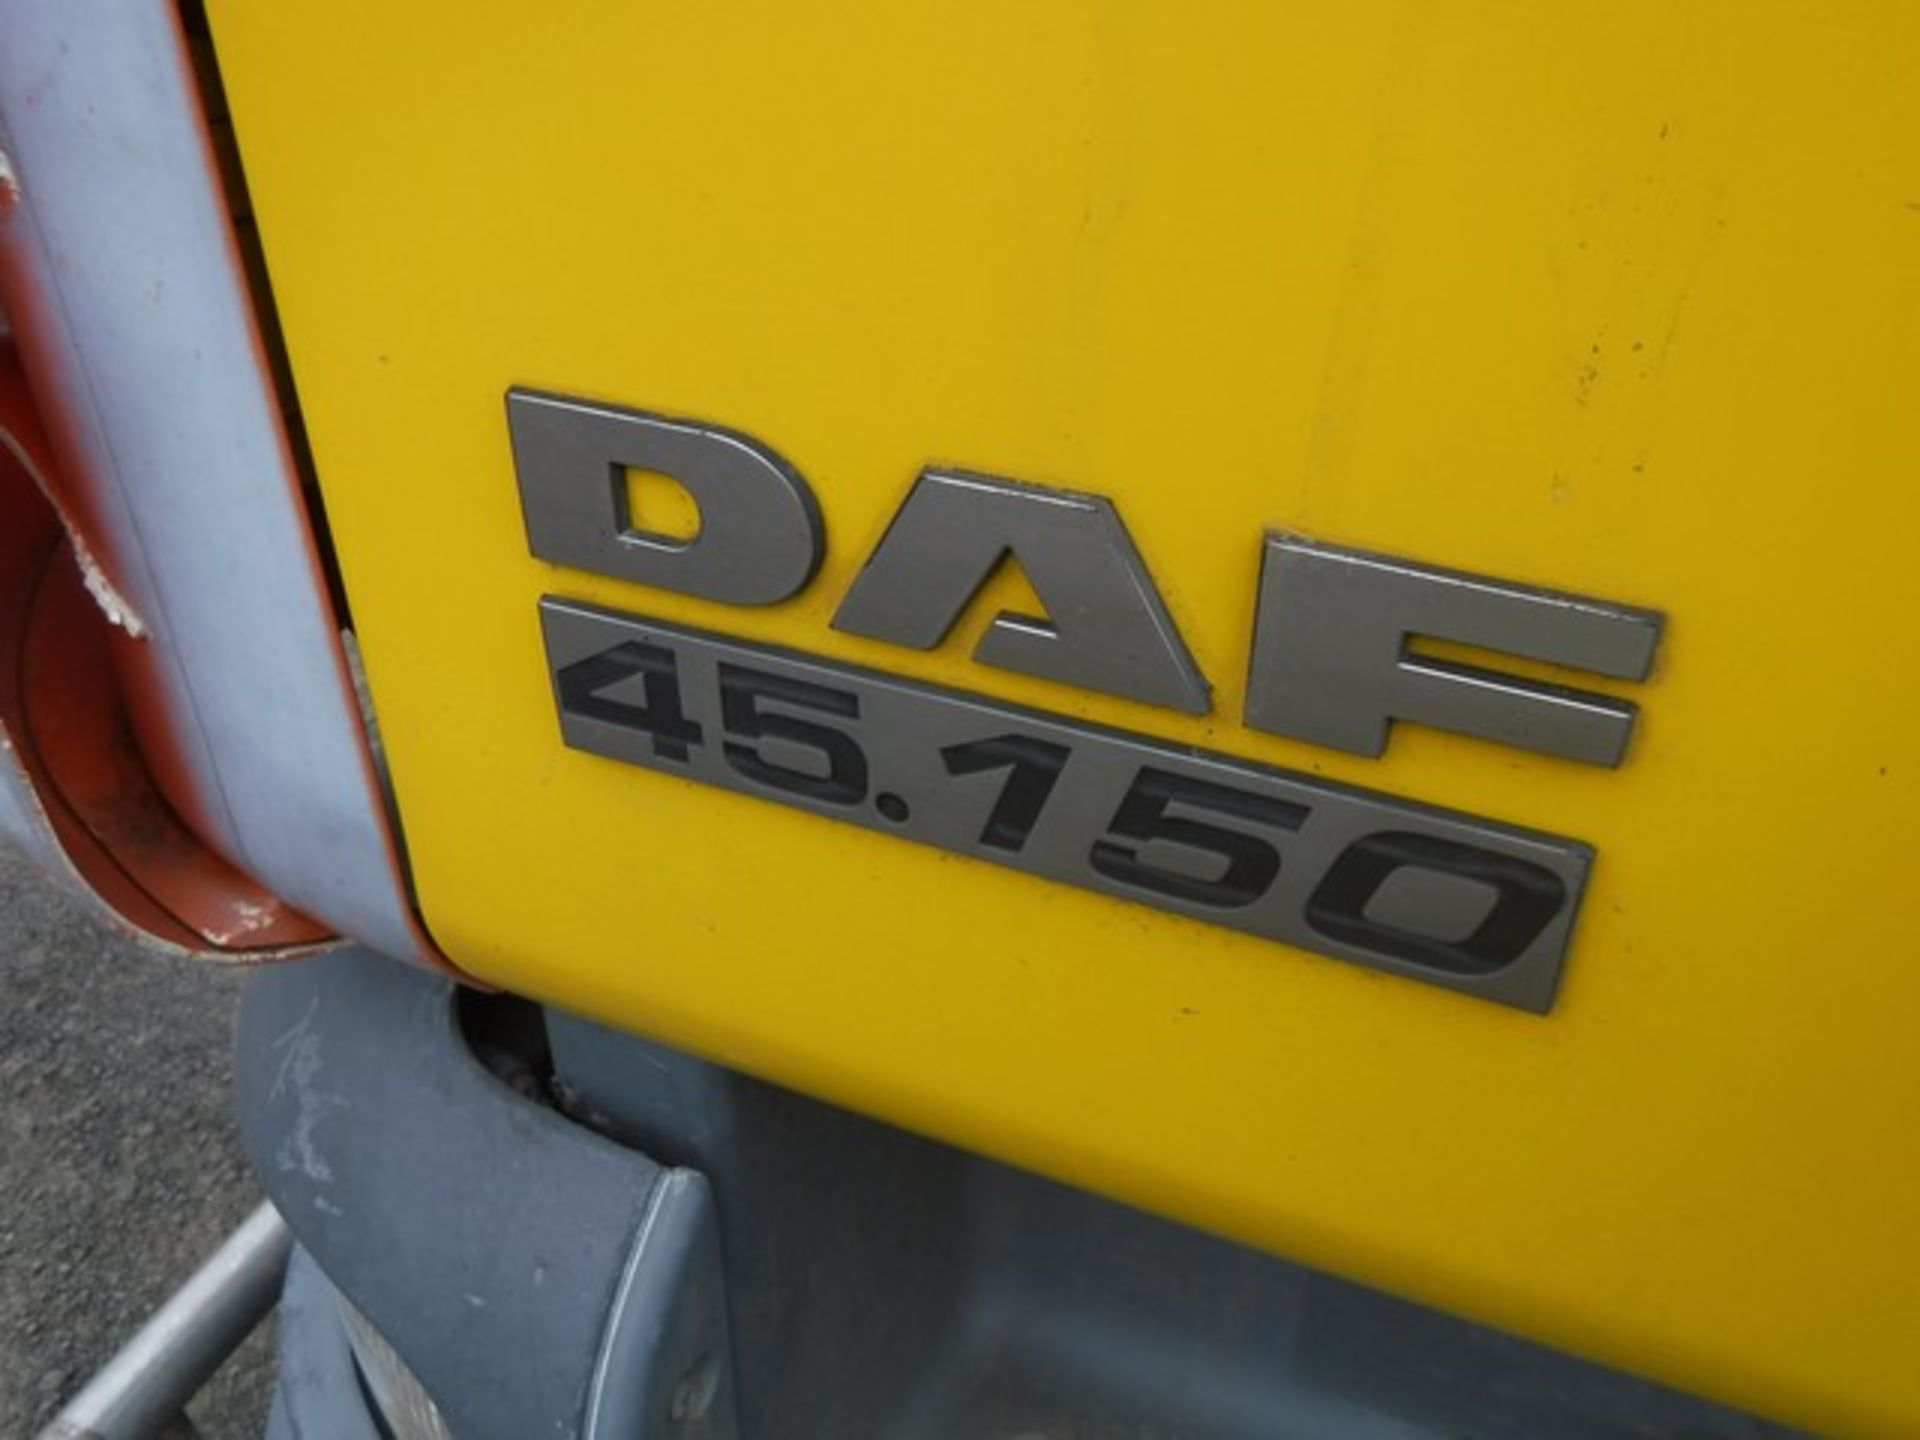 DAF TRUCKS MODEL FA 45.150 - 3920cc - Bild 3 aus 23